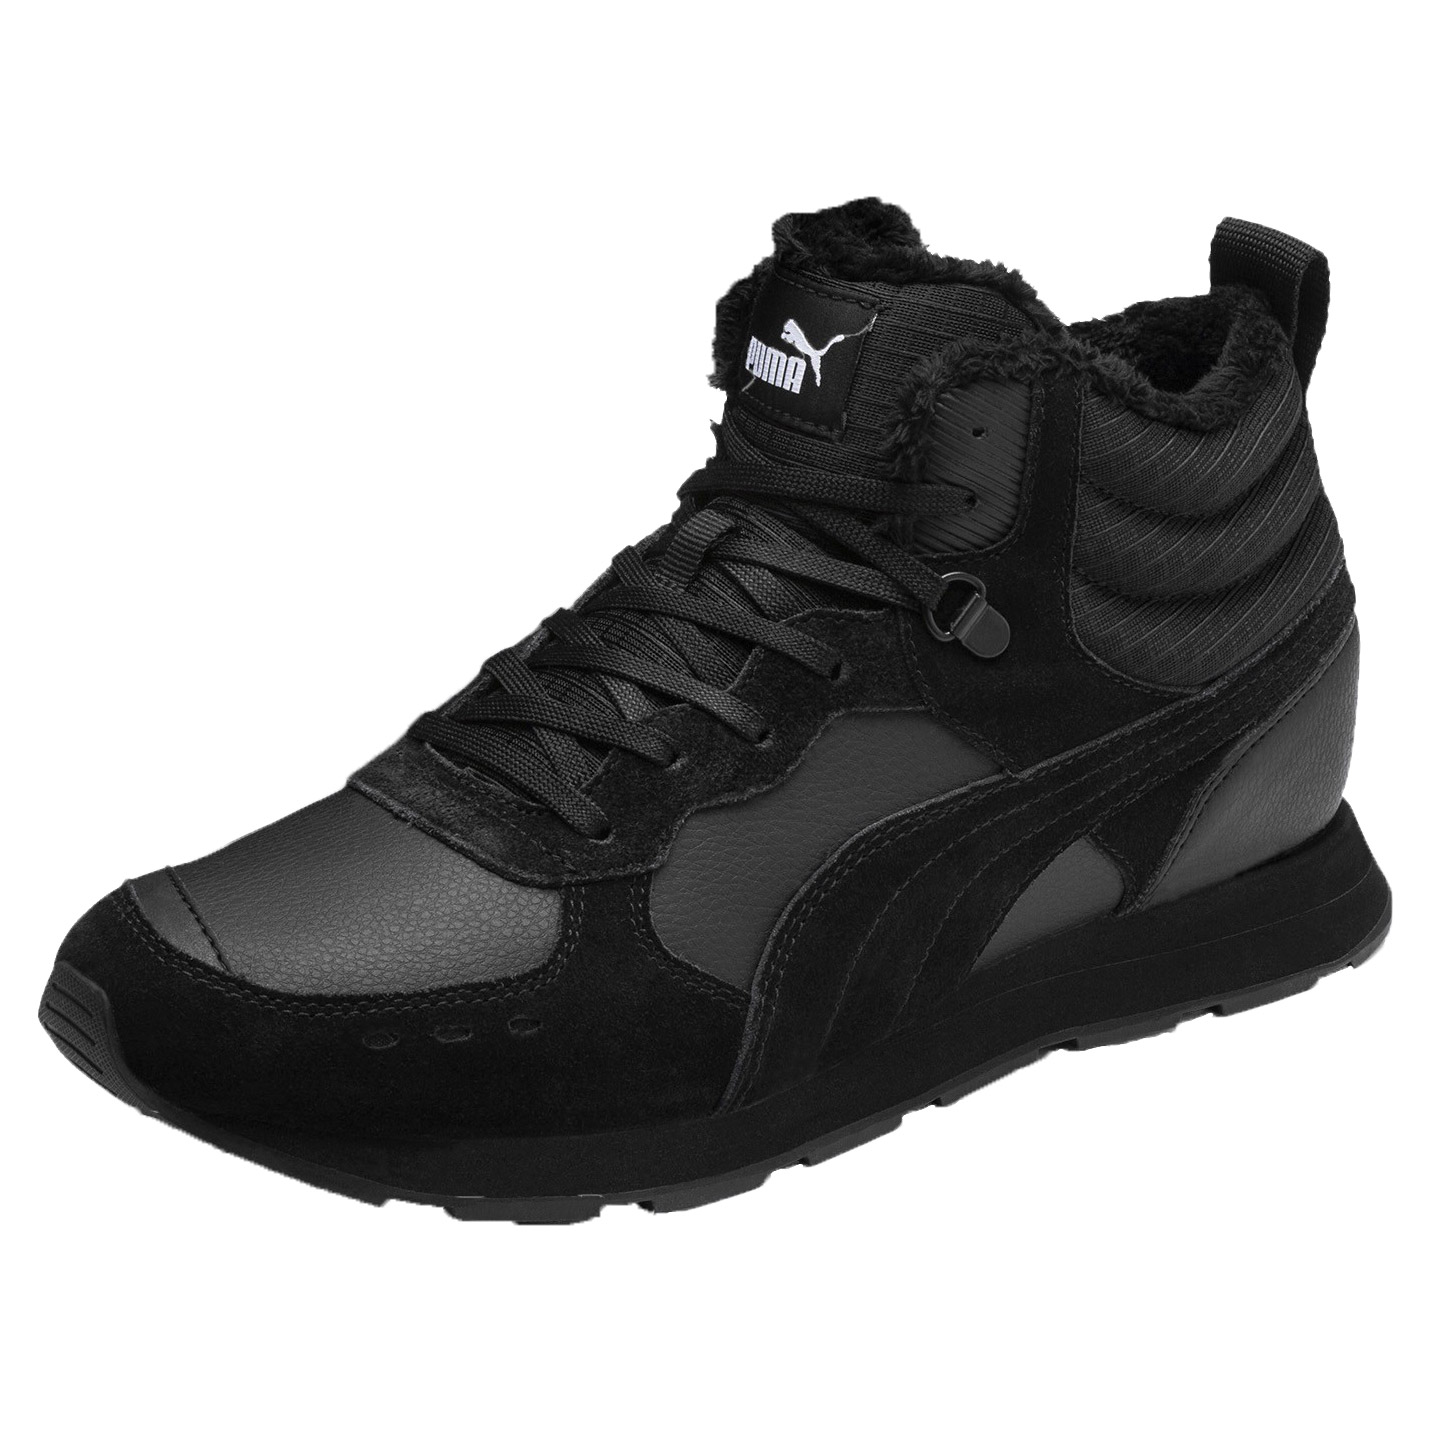 Puma Vista MIid WTR  Herren Sneaker Boots Stiefelette Winter 369783